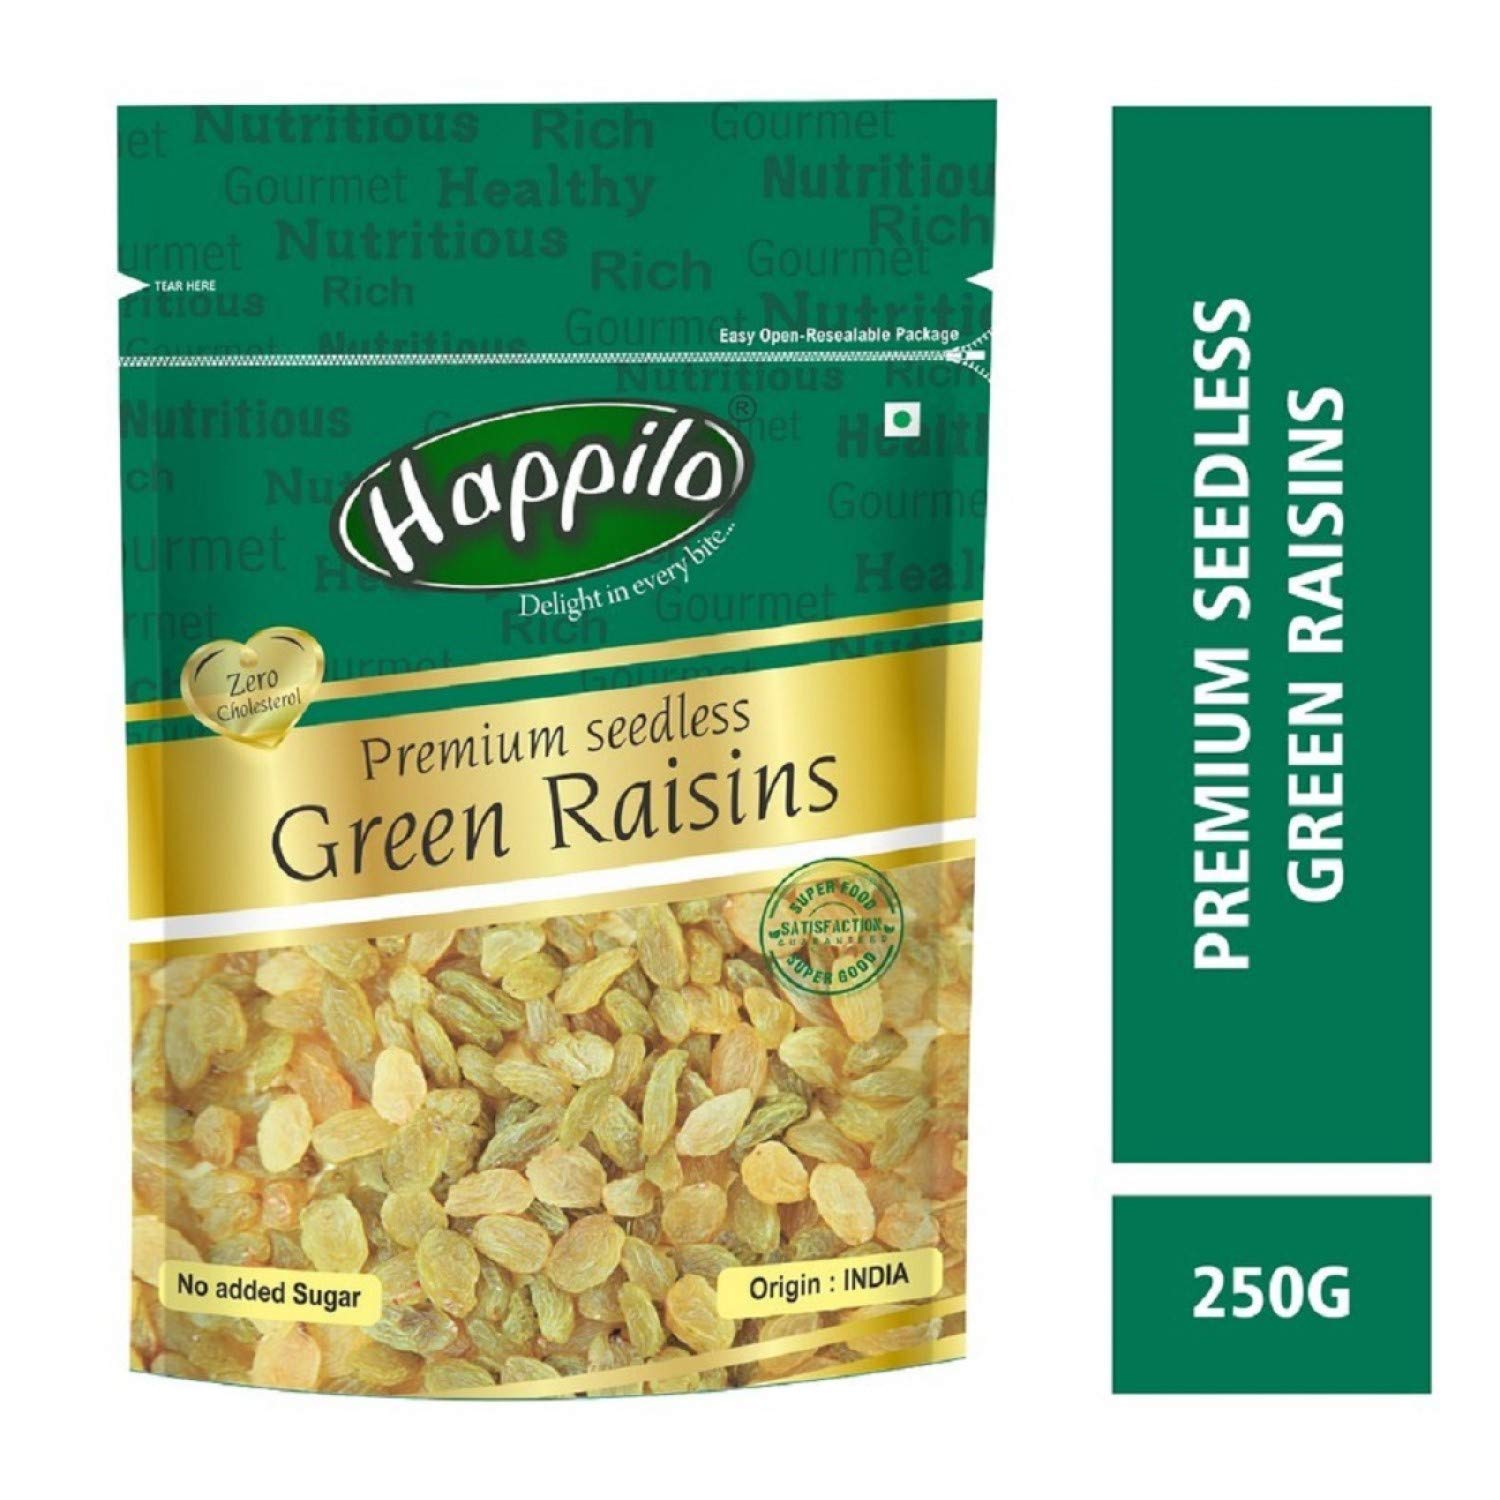 Premium Seedless Green Raisins